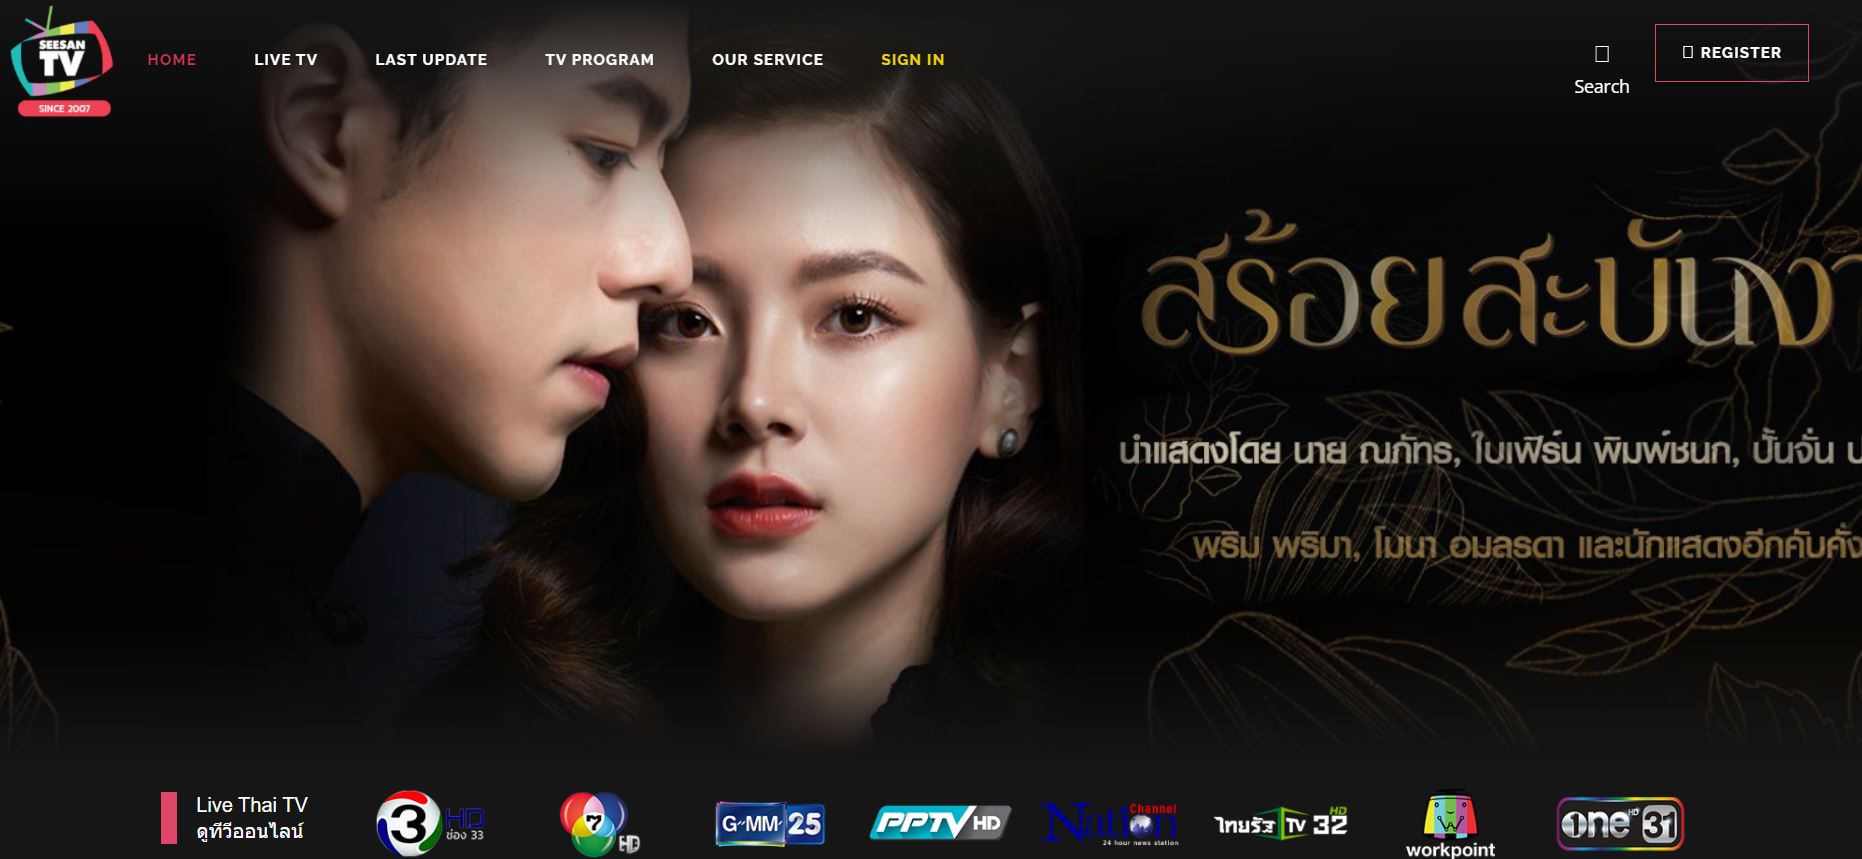 SeesanTV - Top Thai Online TV Streaming Services 2022